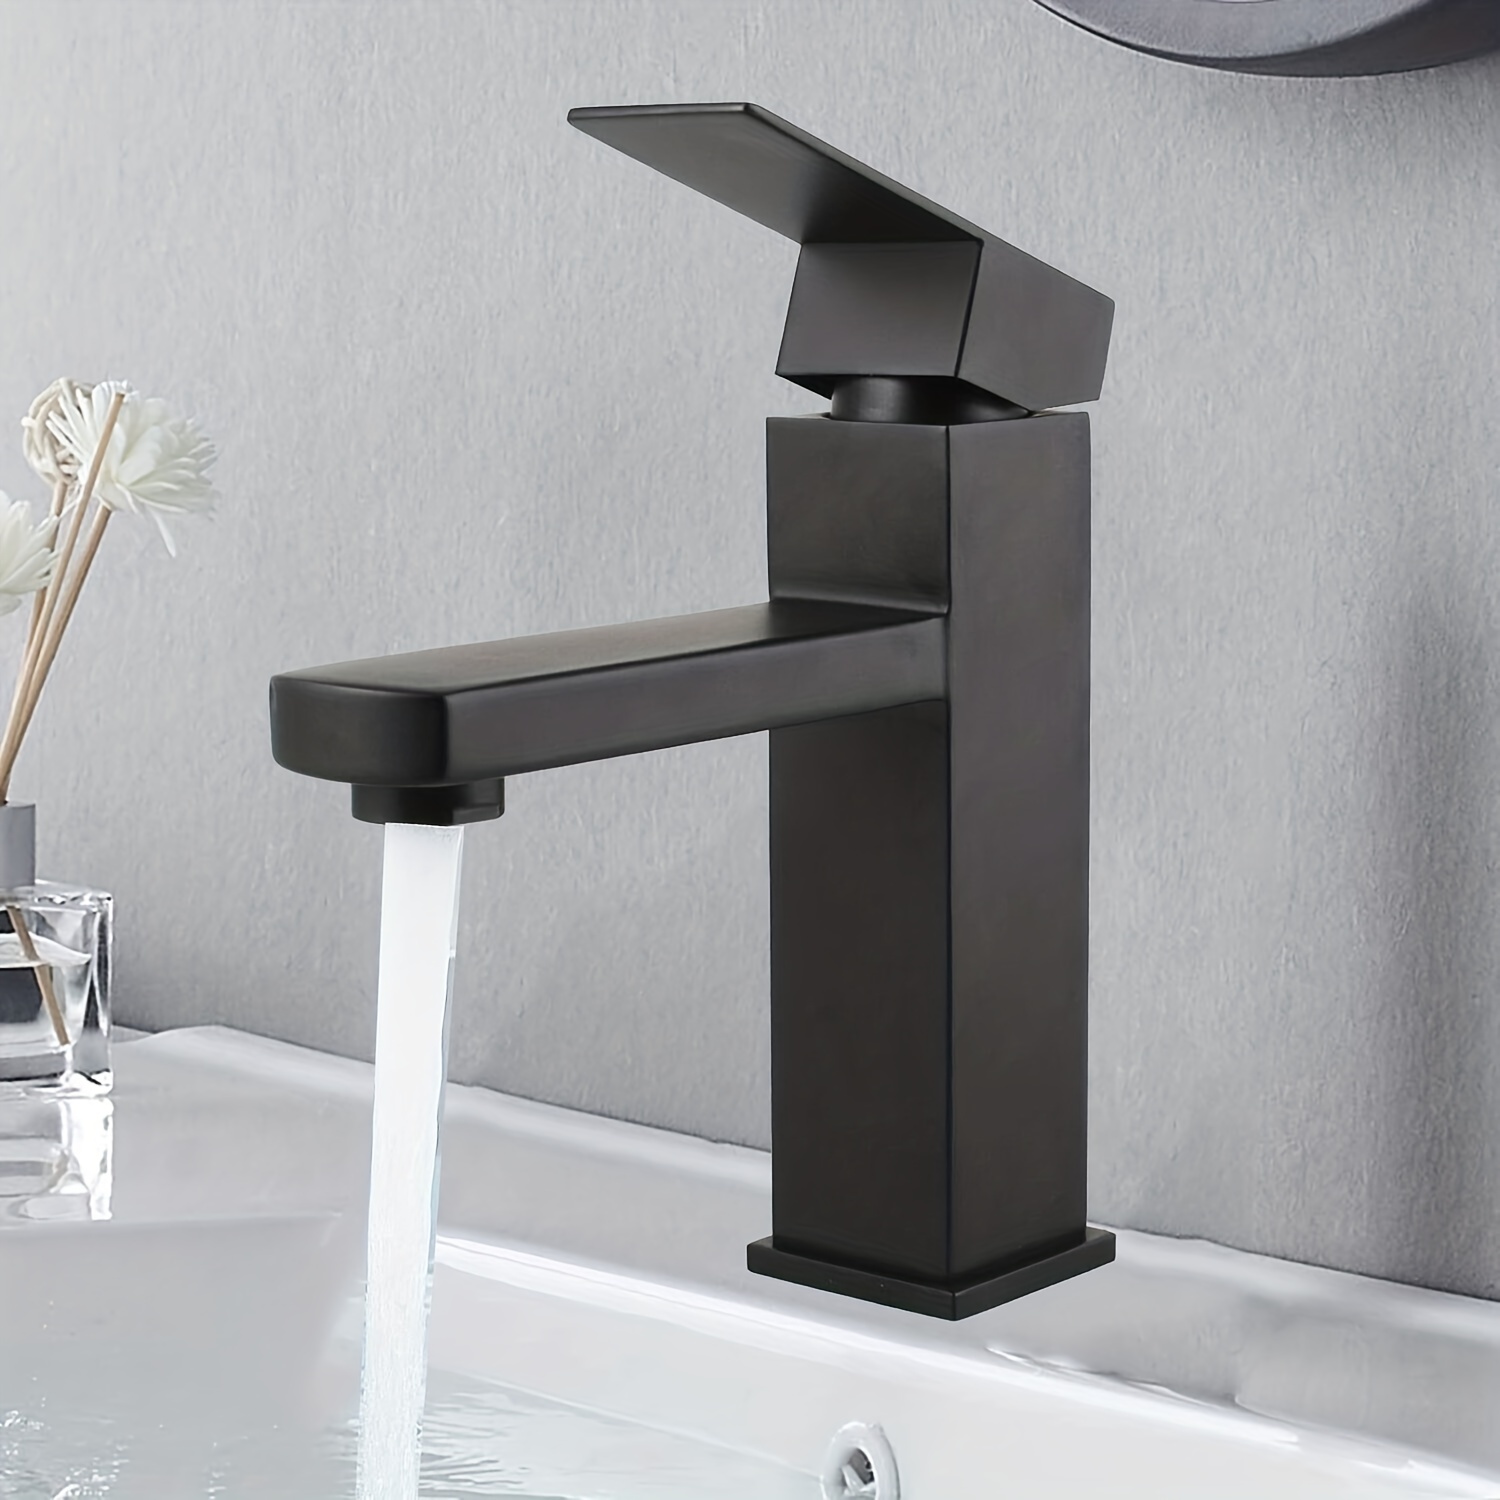 Grifo de baño negro mate – Grifo de baño moderno de un solo orificio negro,  construcción de acero inoxidable sin plomo, cartucho de cerámica